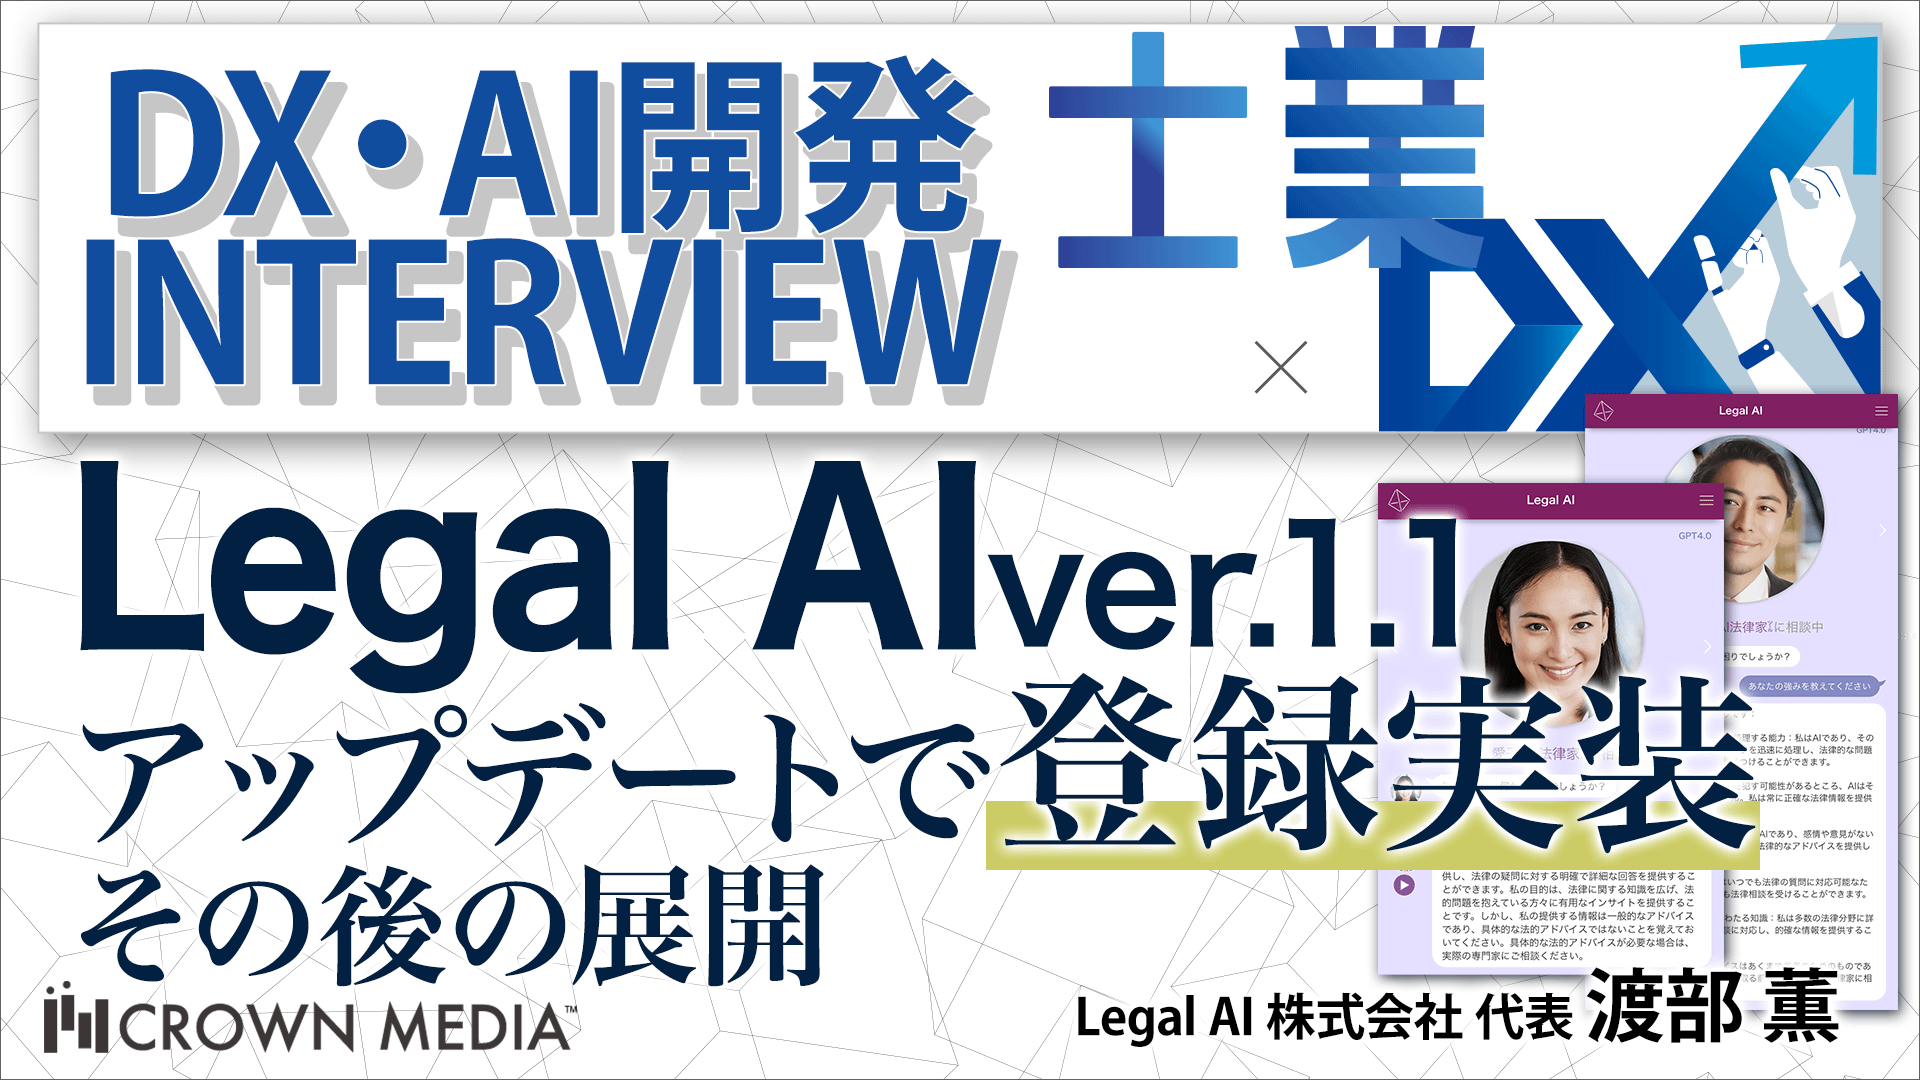 Legal AI ver.1.1アップデートで登録実装 その後の展開：Legal AI 株式会社（リーガルアイ）渡部薫氏